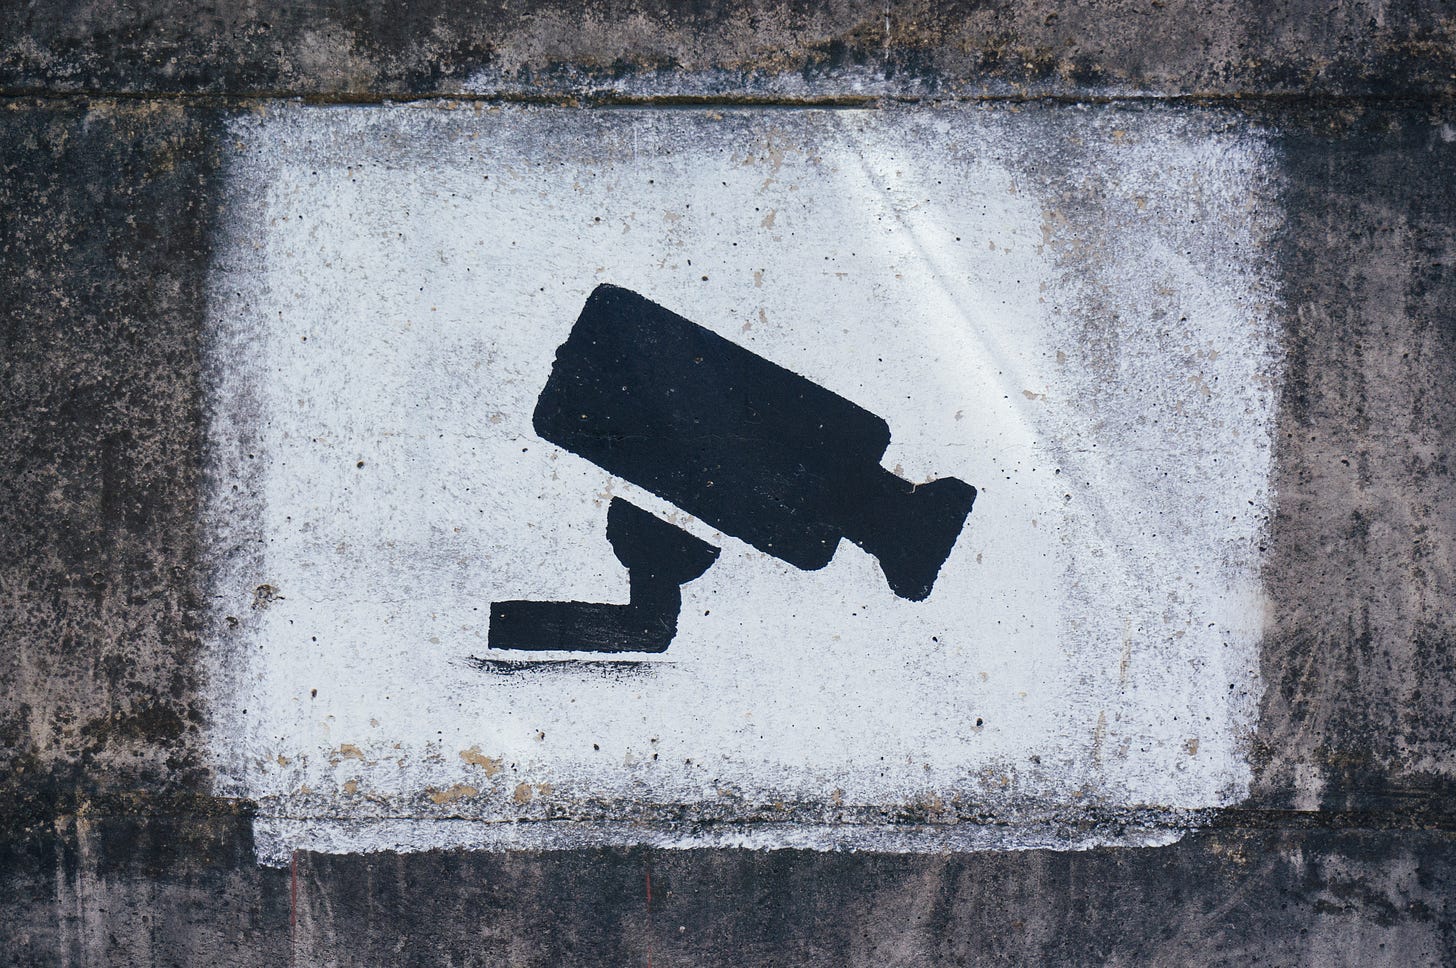 A photo of a graffiti stenciled surveillance camera.